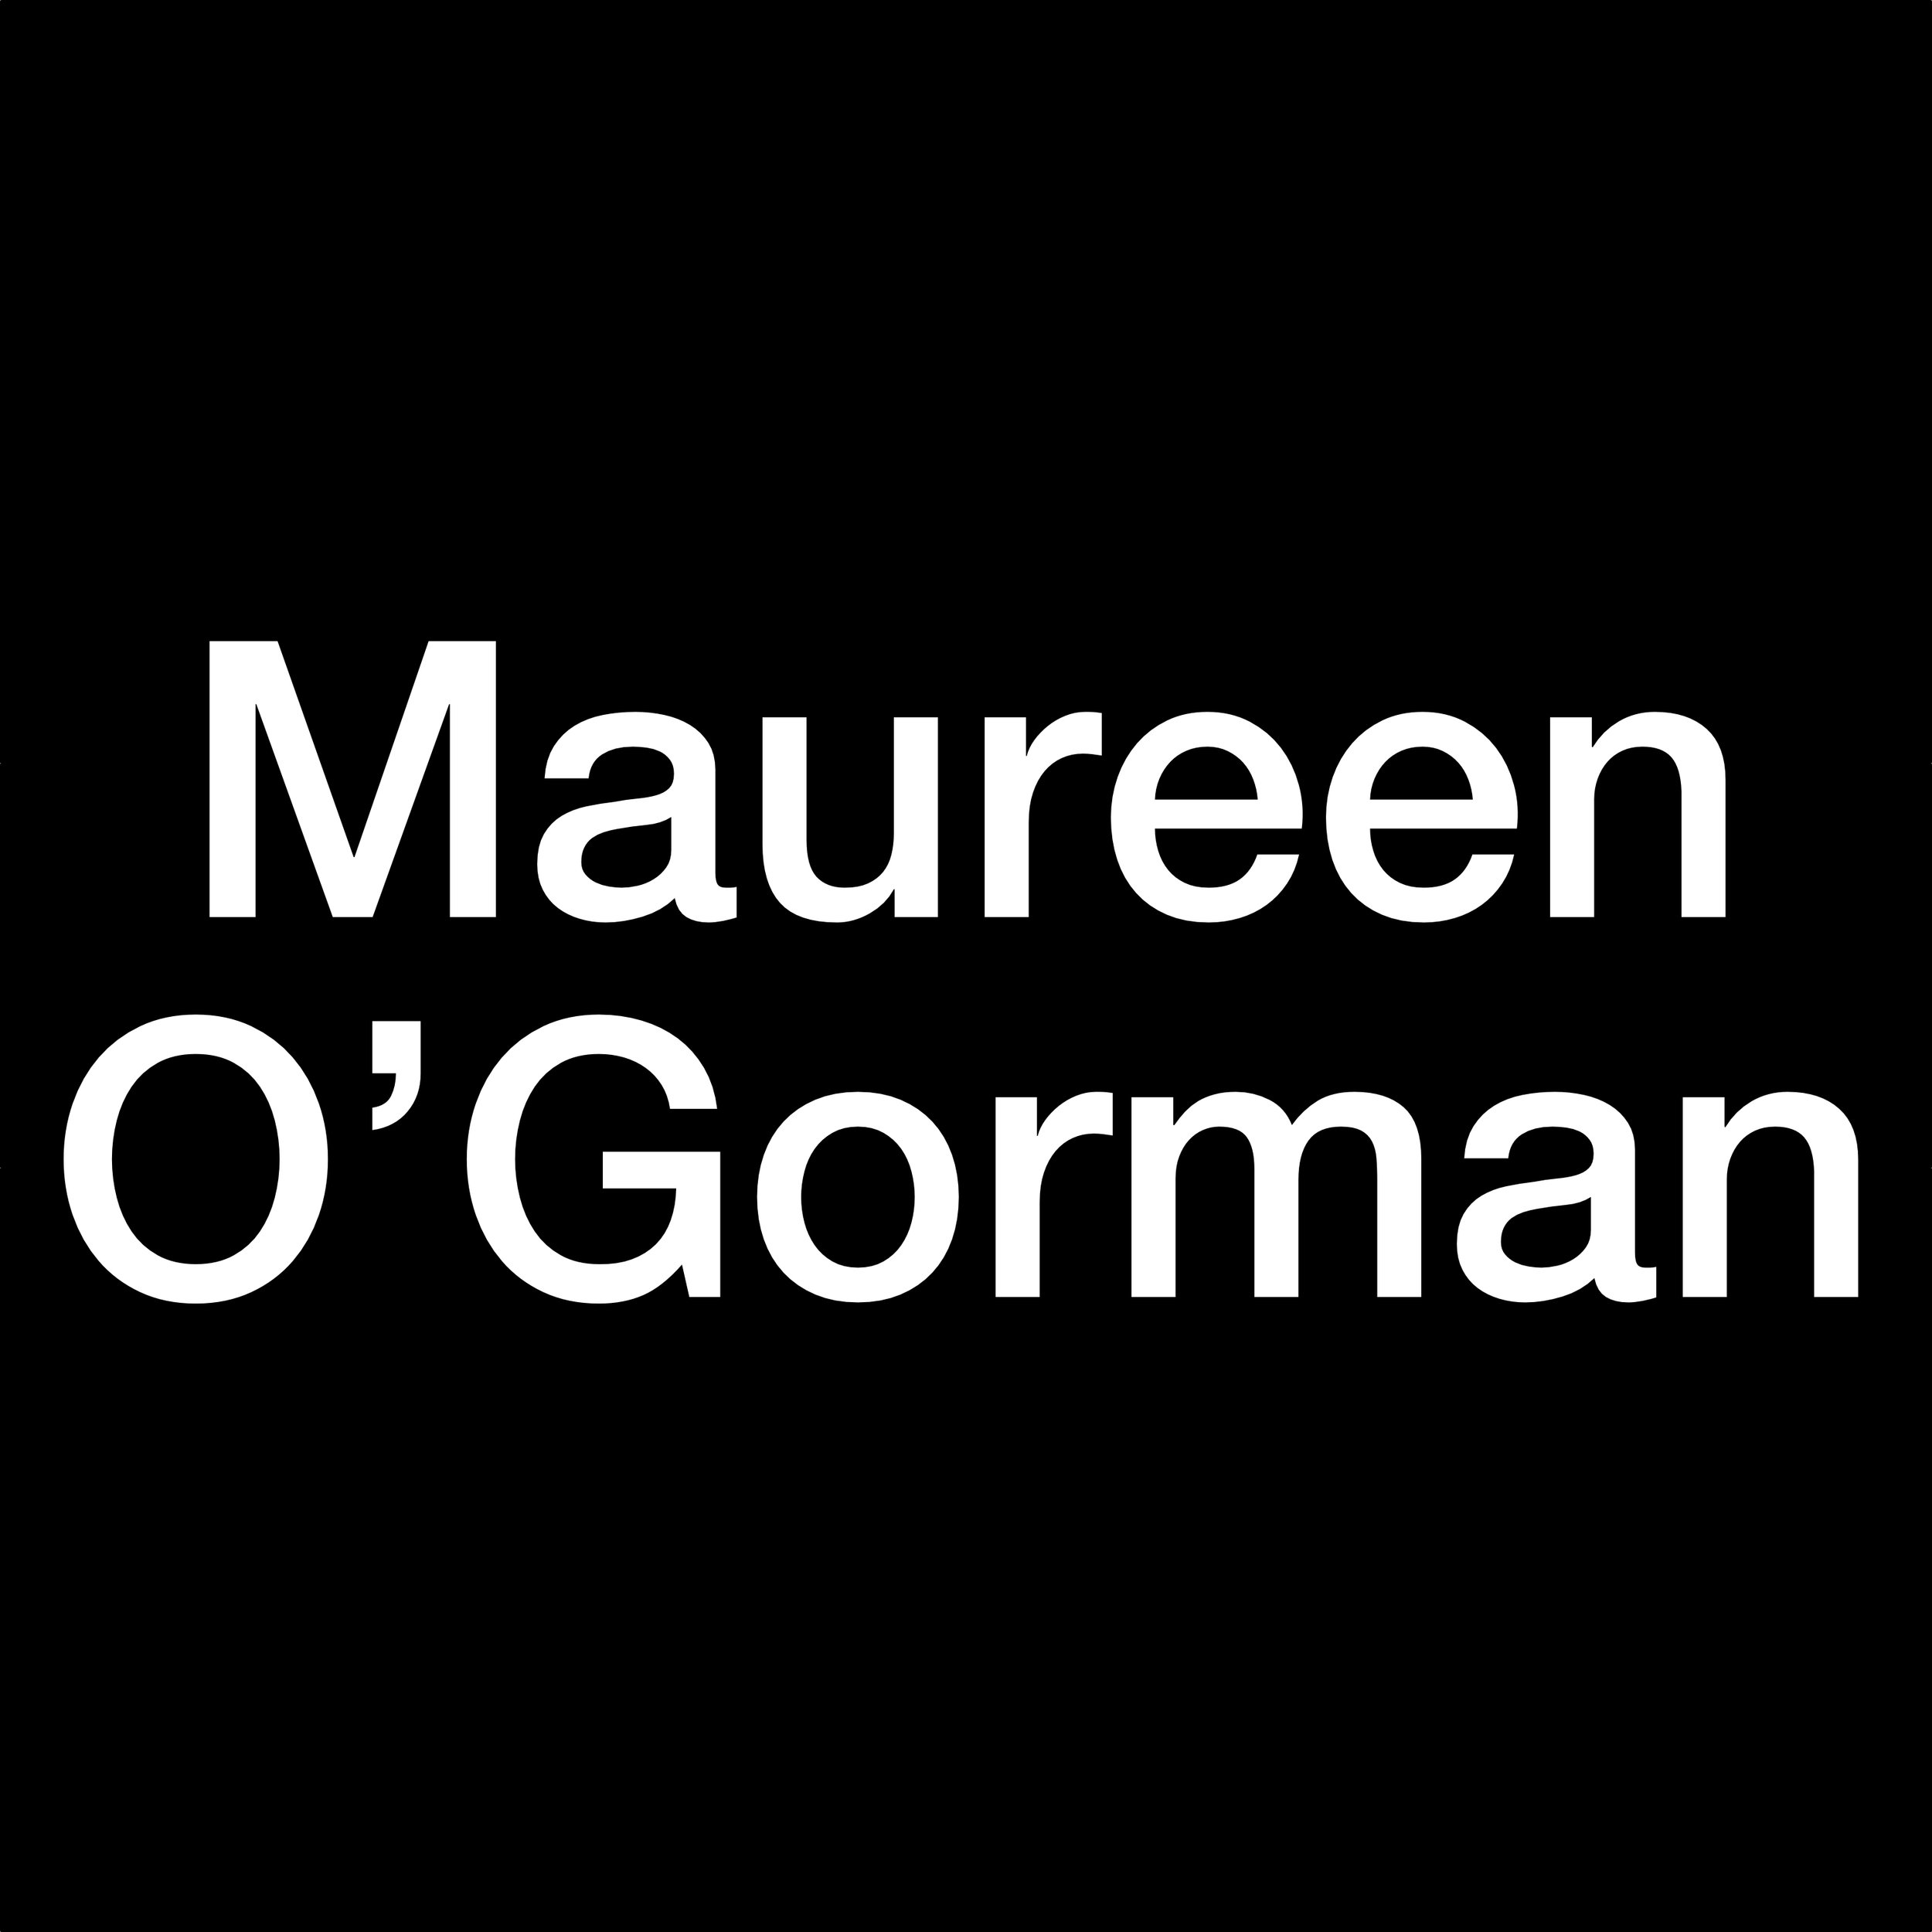 Maureen O’Gorman.jpg